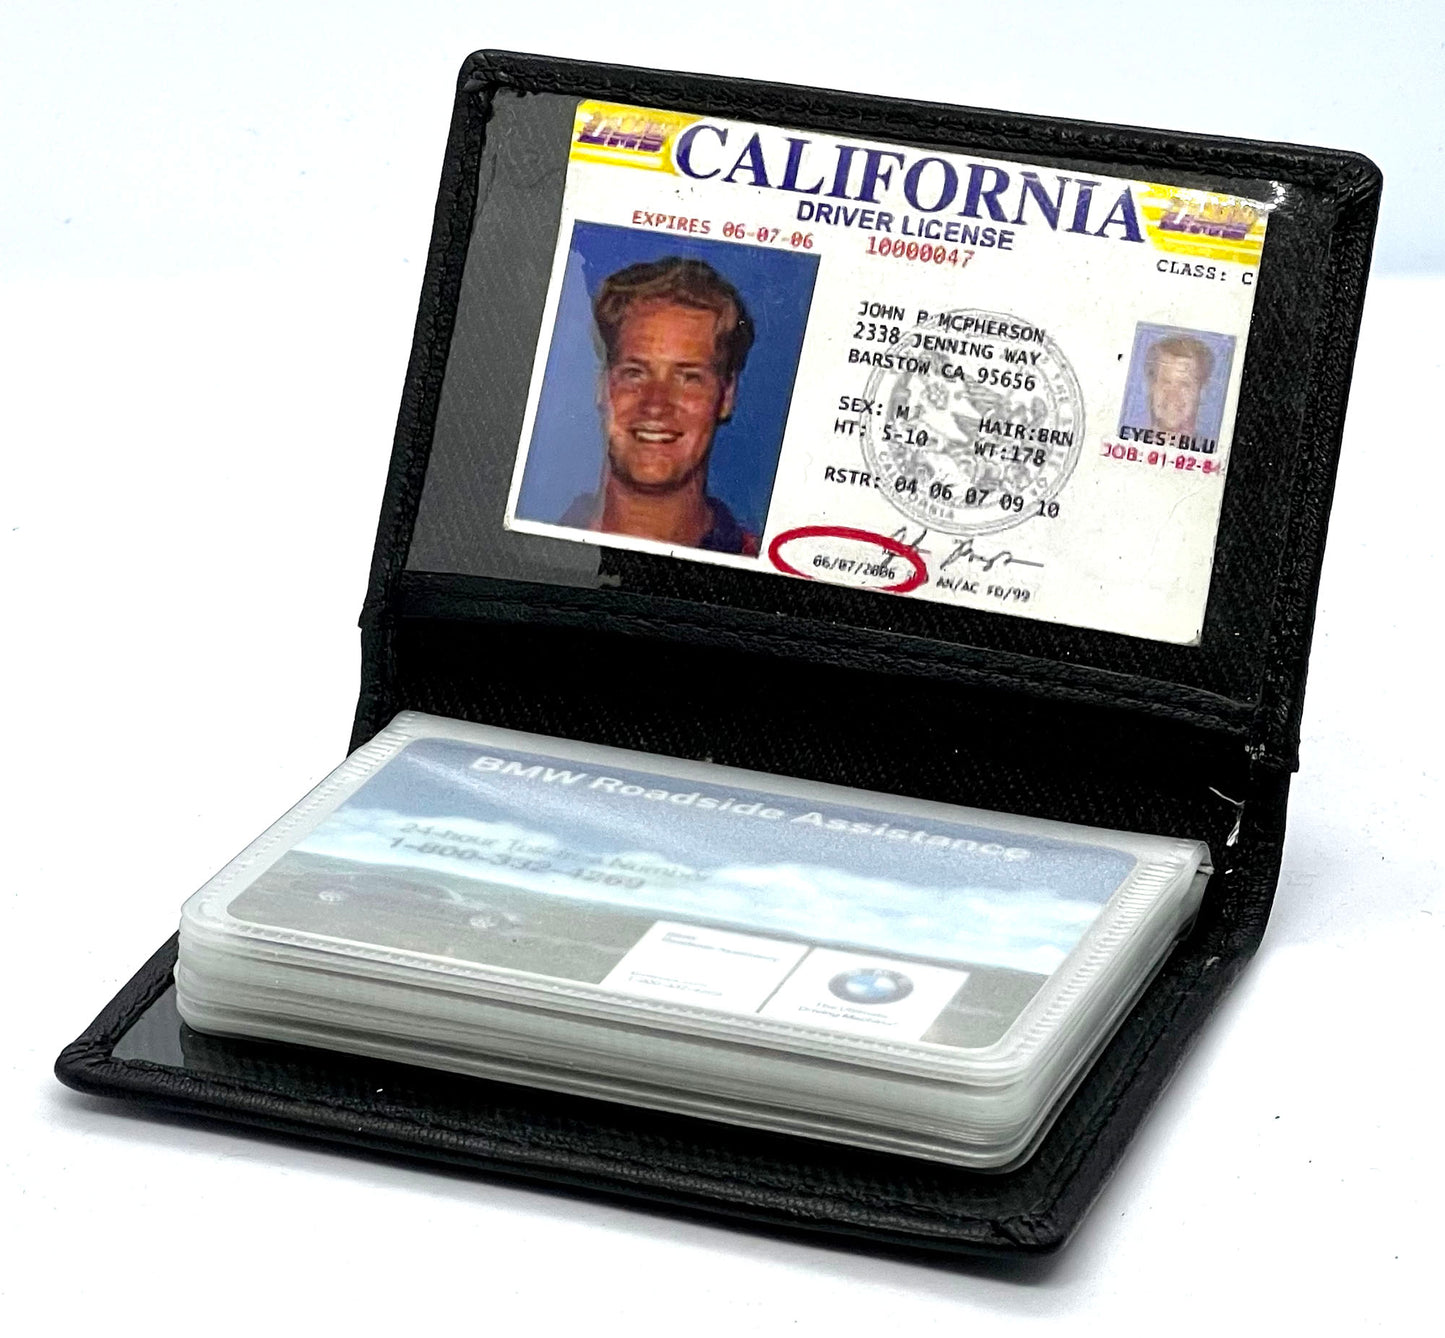 Genuine Leather Business Card Organizer Plastic Insert ID Credit Card Holder